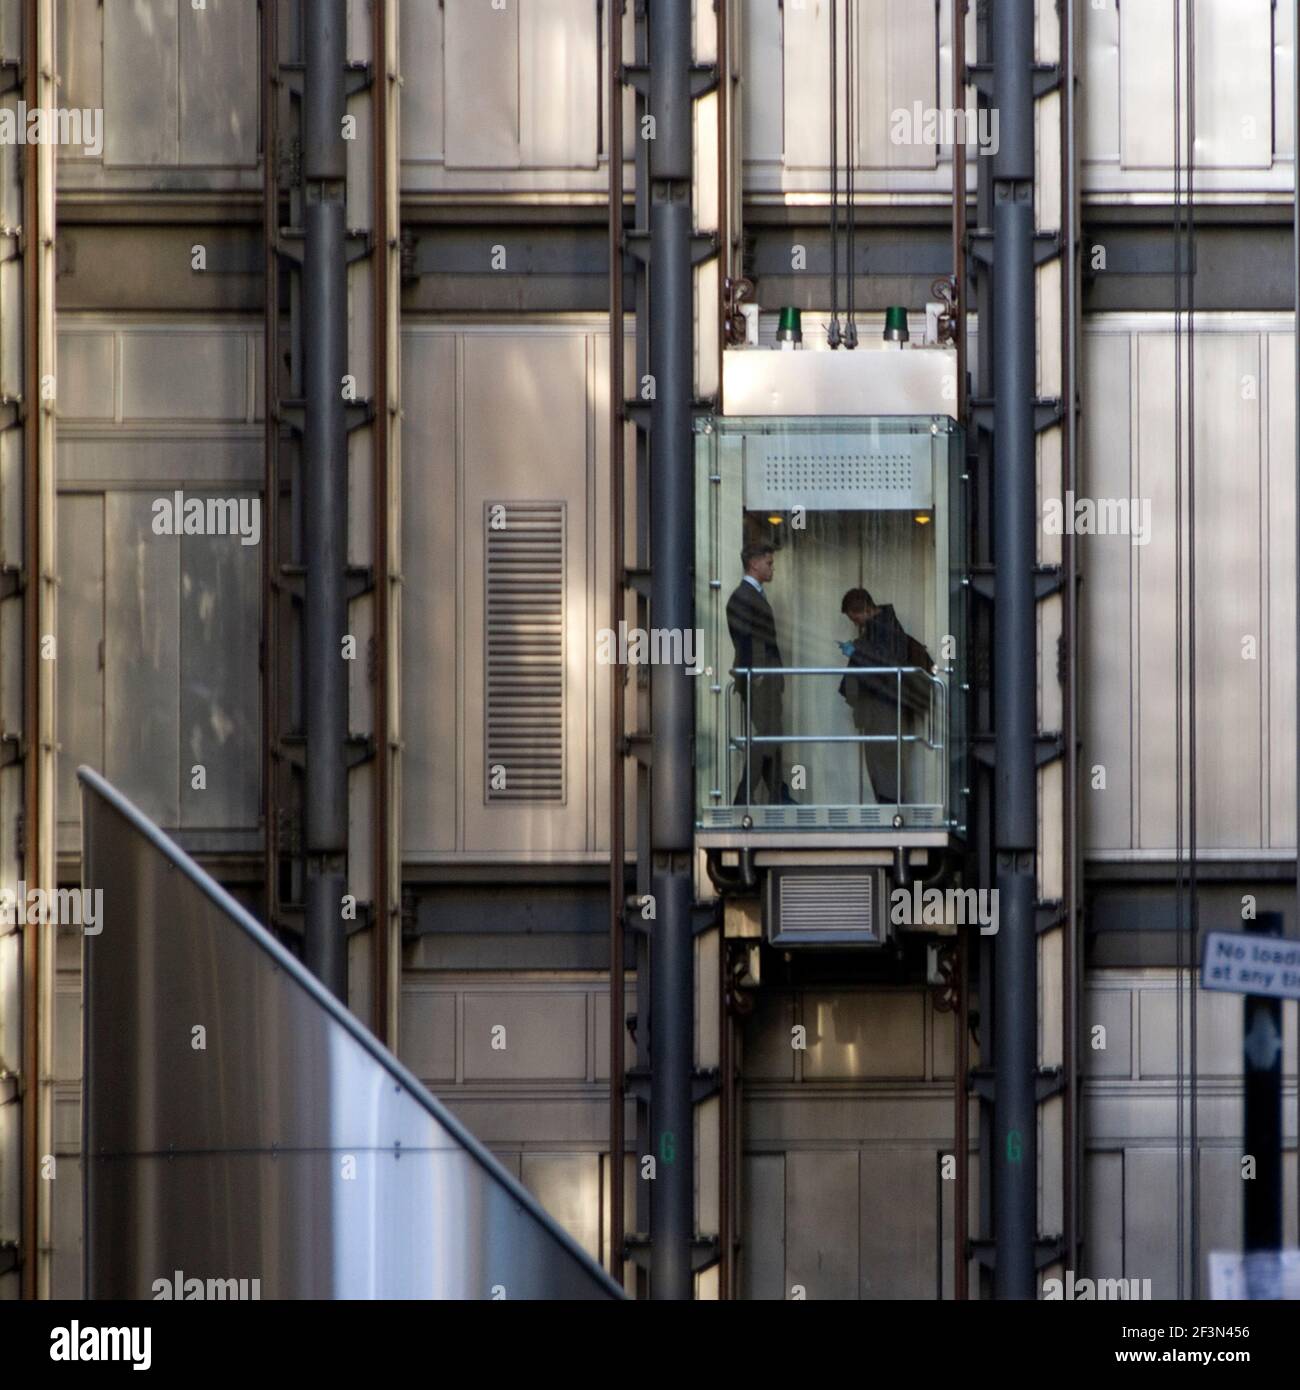 Lloyd's Building 1 Lime Street City of London | Architect: Richard Rogers | Designer: Richard Roger's Associates Stock Photo